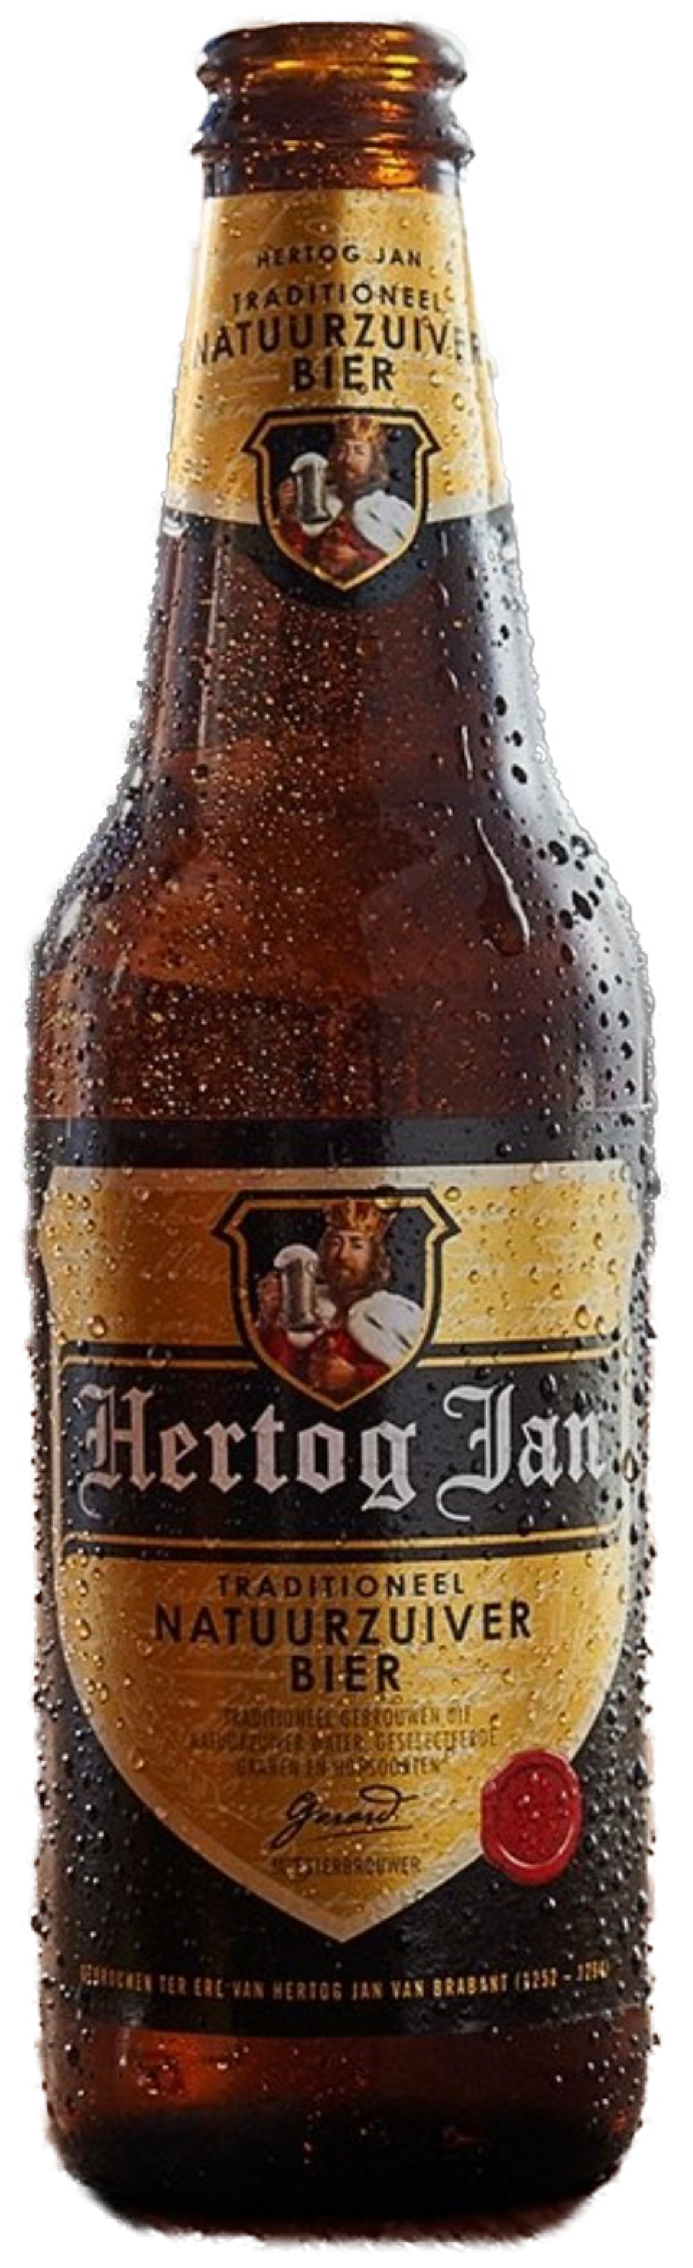 Herzog Jan Naturtrübes Bier 0,3L MEHRWEG